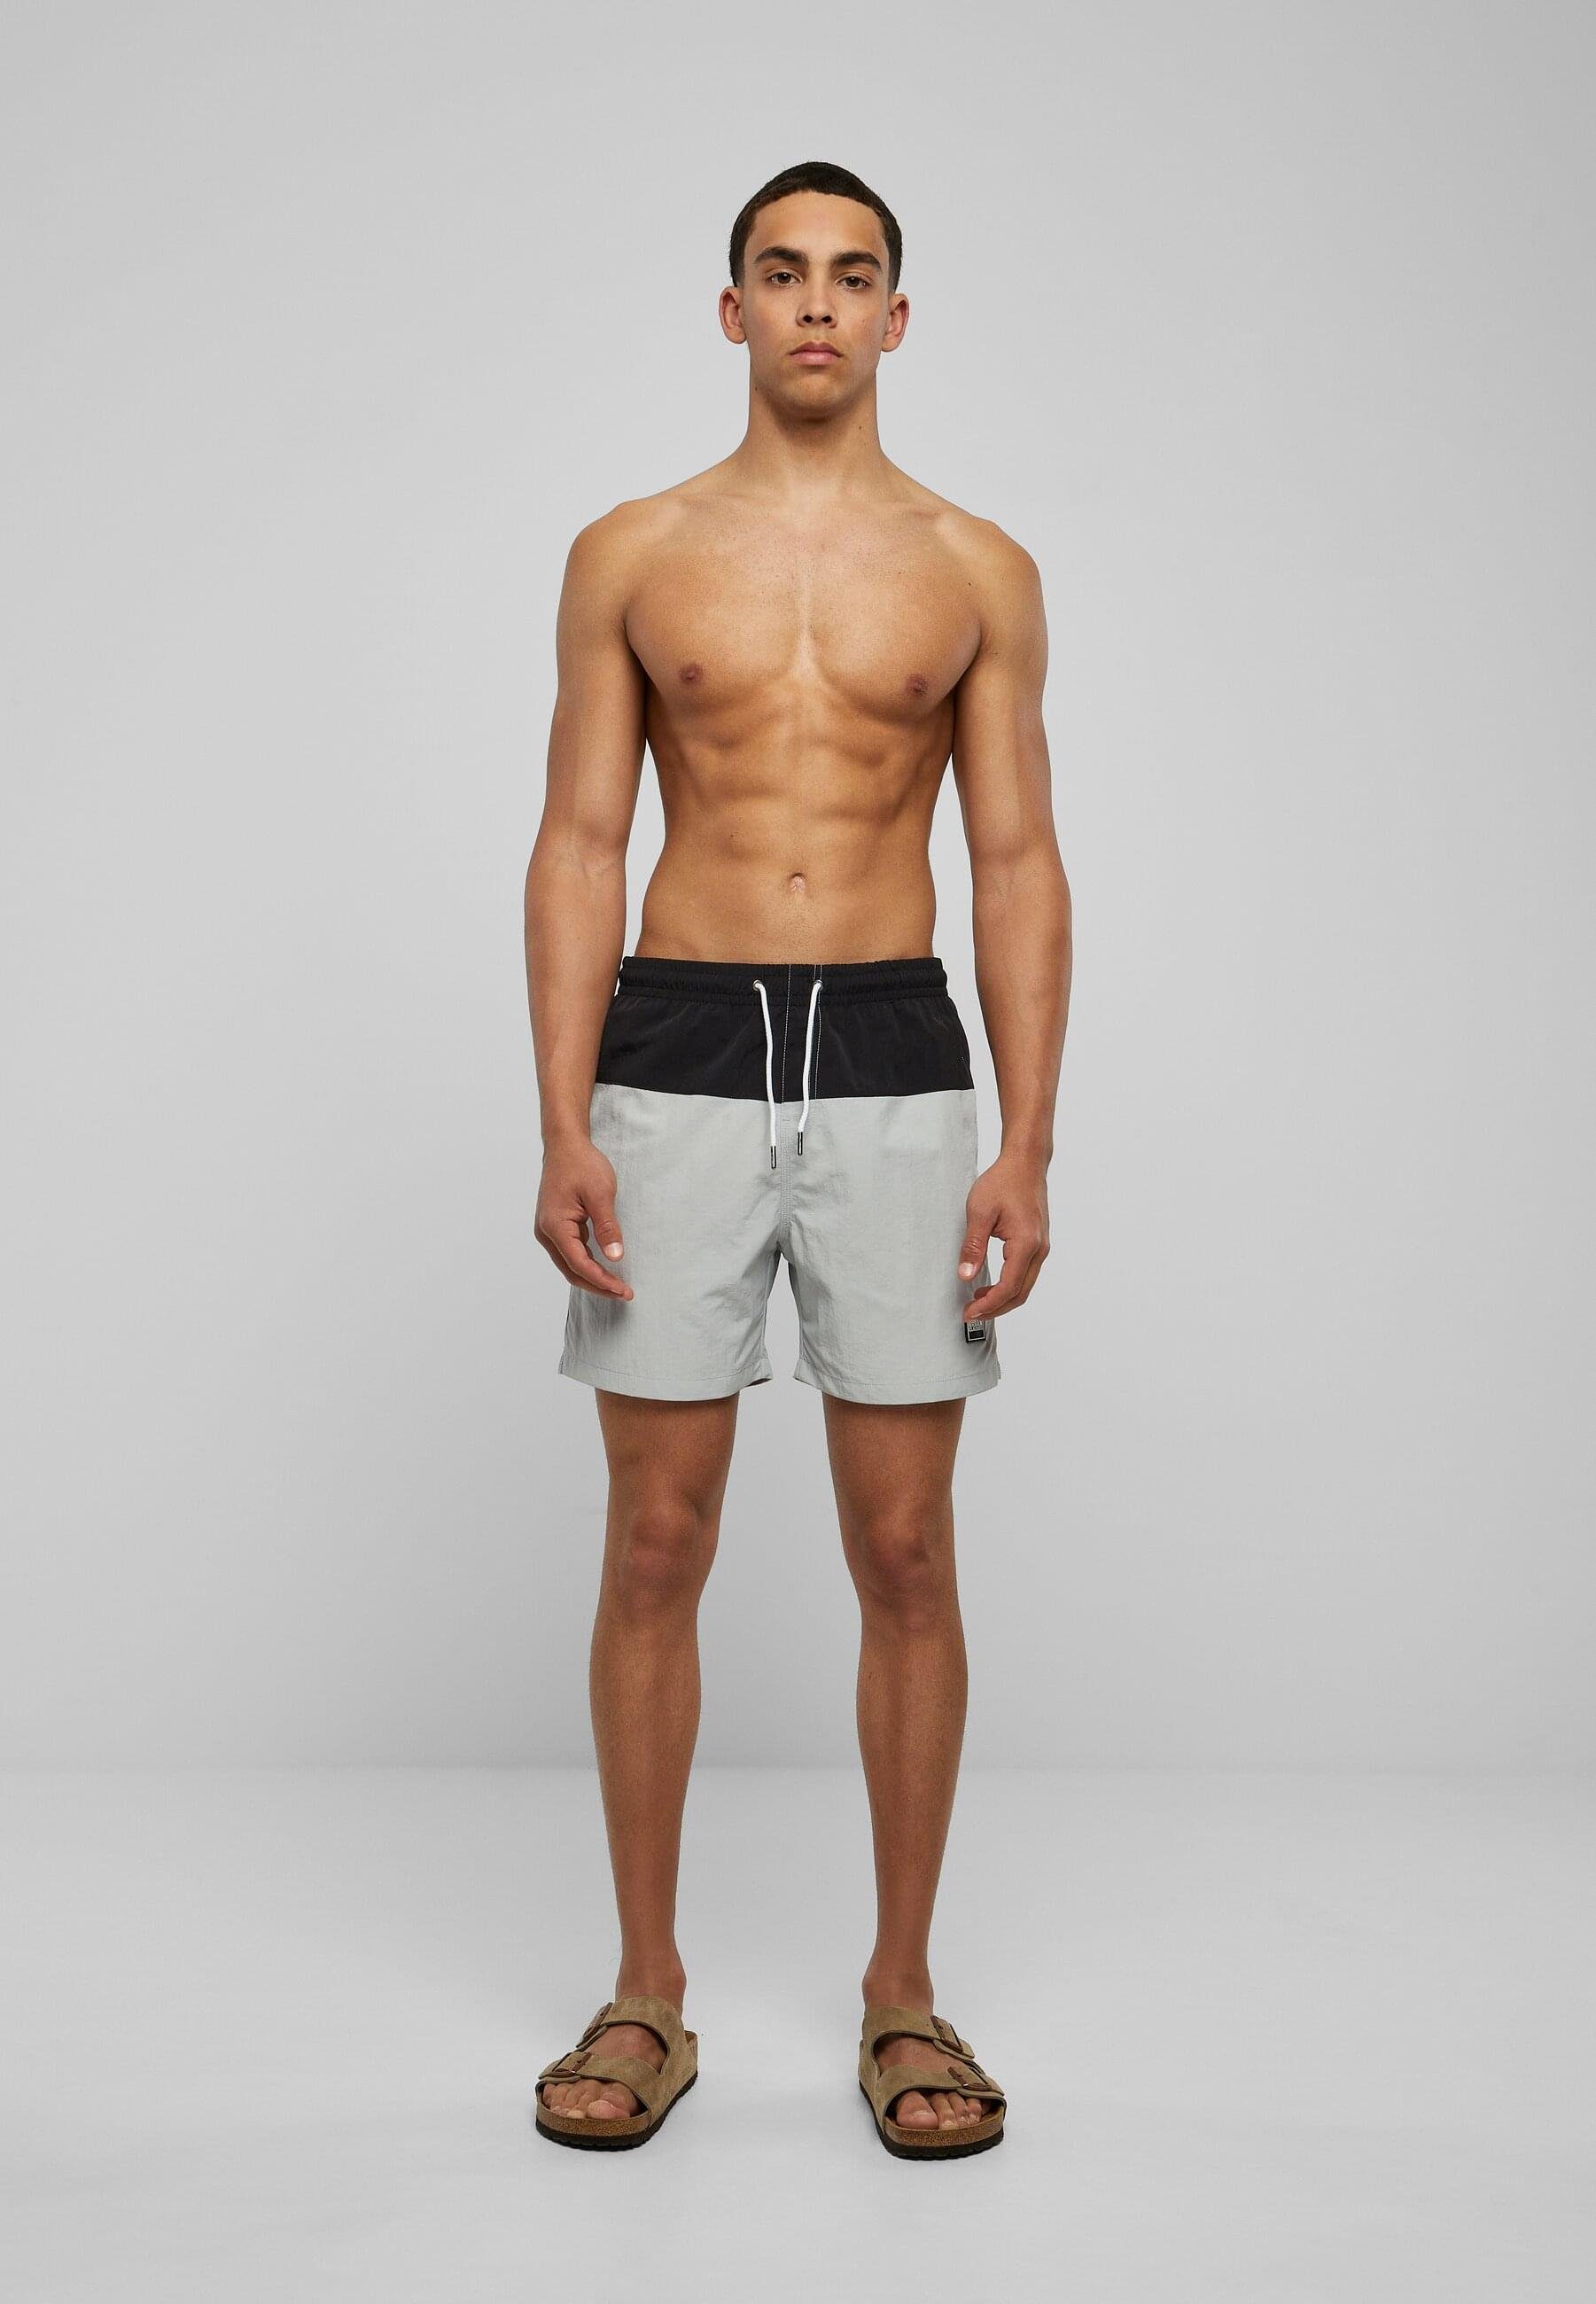 URBAN CLASSICS lightasphalt/black Shorts Badeshorts Swim Herren